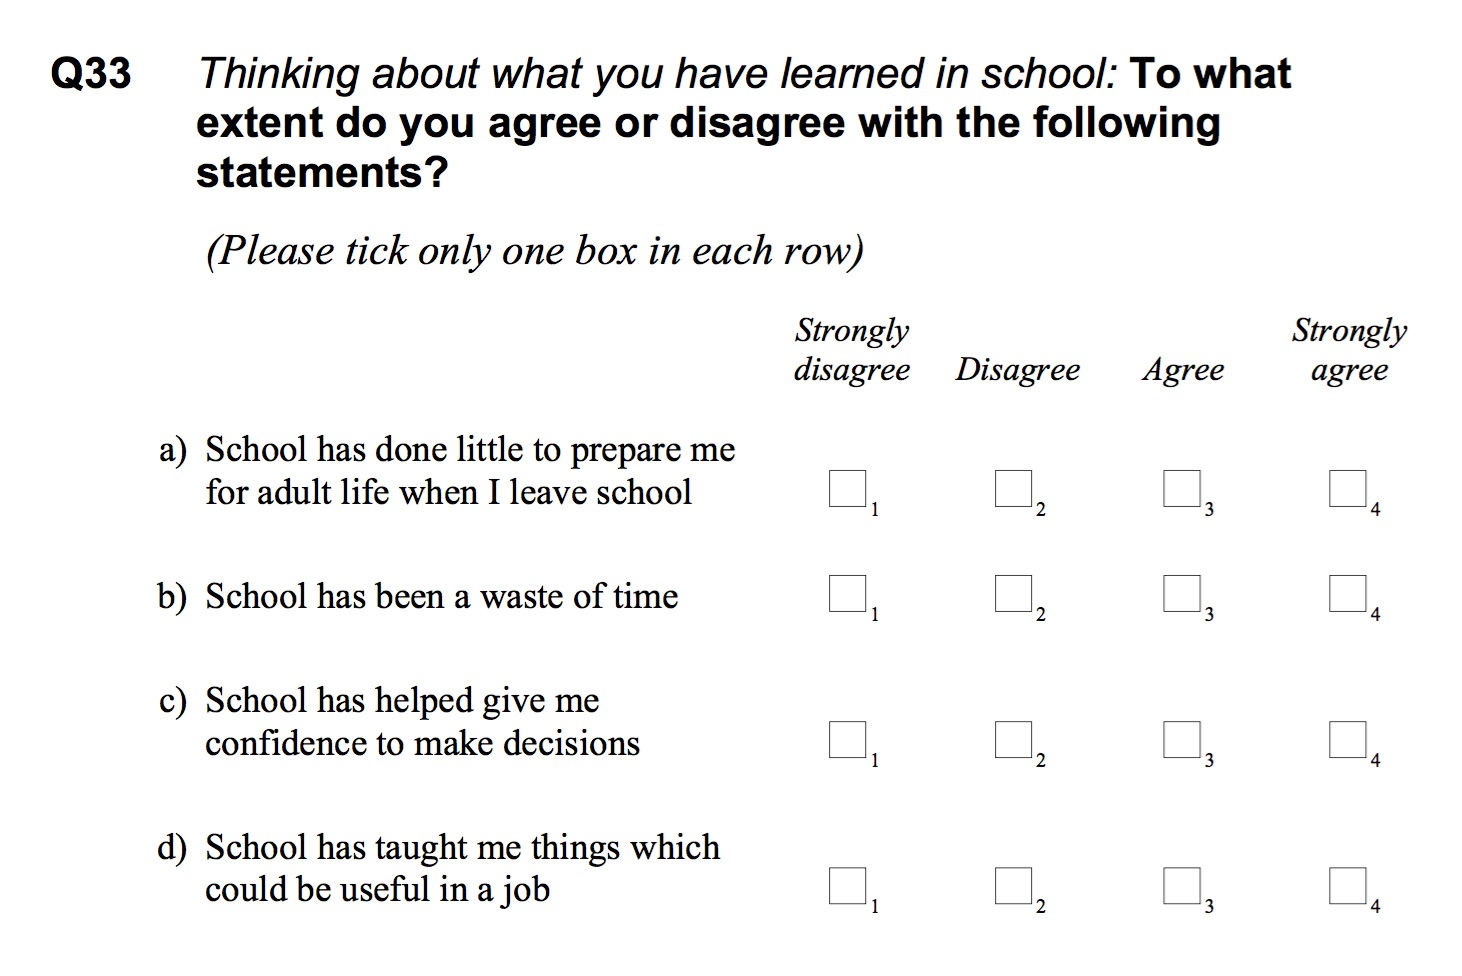 PISA 2009 student survey items measuring attitude toward school.